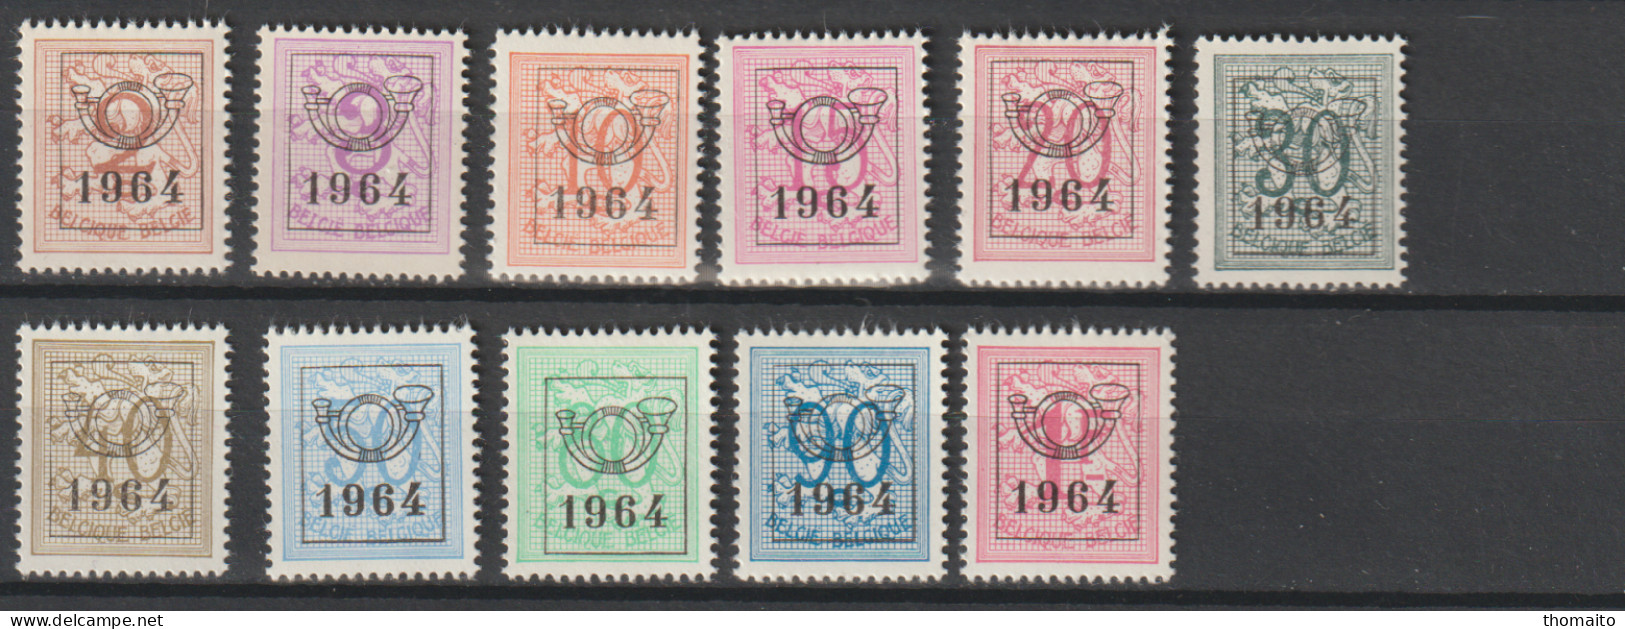 België/Belgique - OBP/COB PRE747-757 - 1964 - Cijfer Op Heraldieke Leeuw - MNH/NSC/** - Typos 1951-80 (Chiffre Sur Lion)